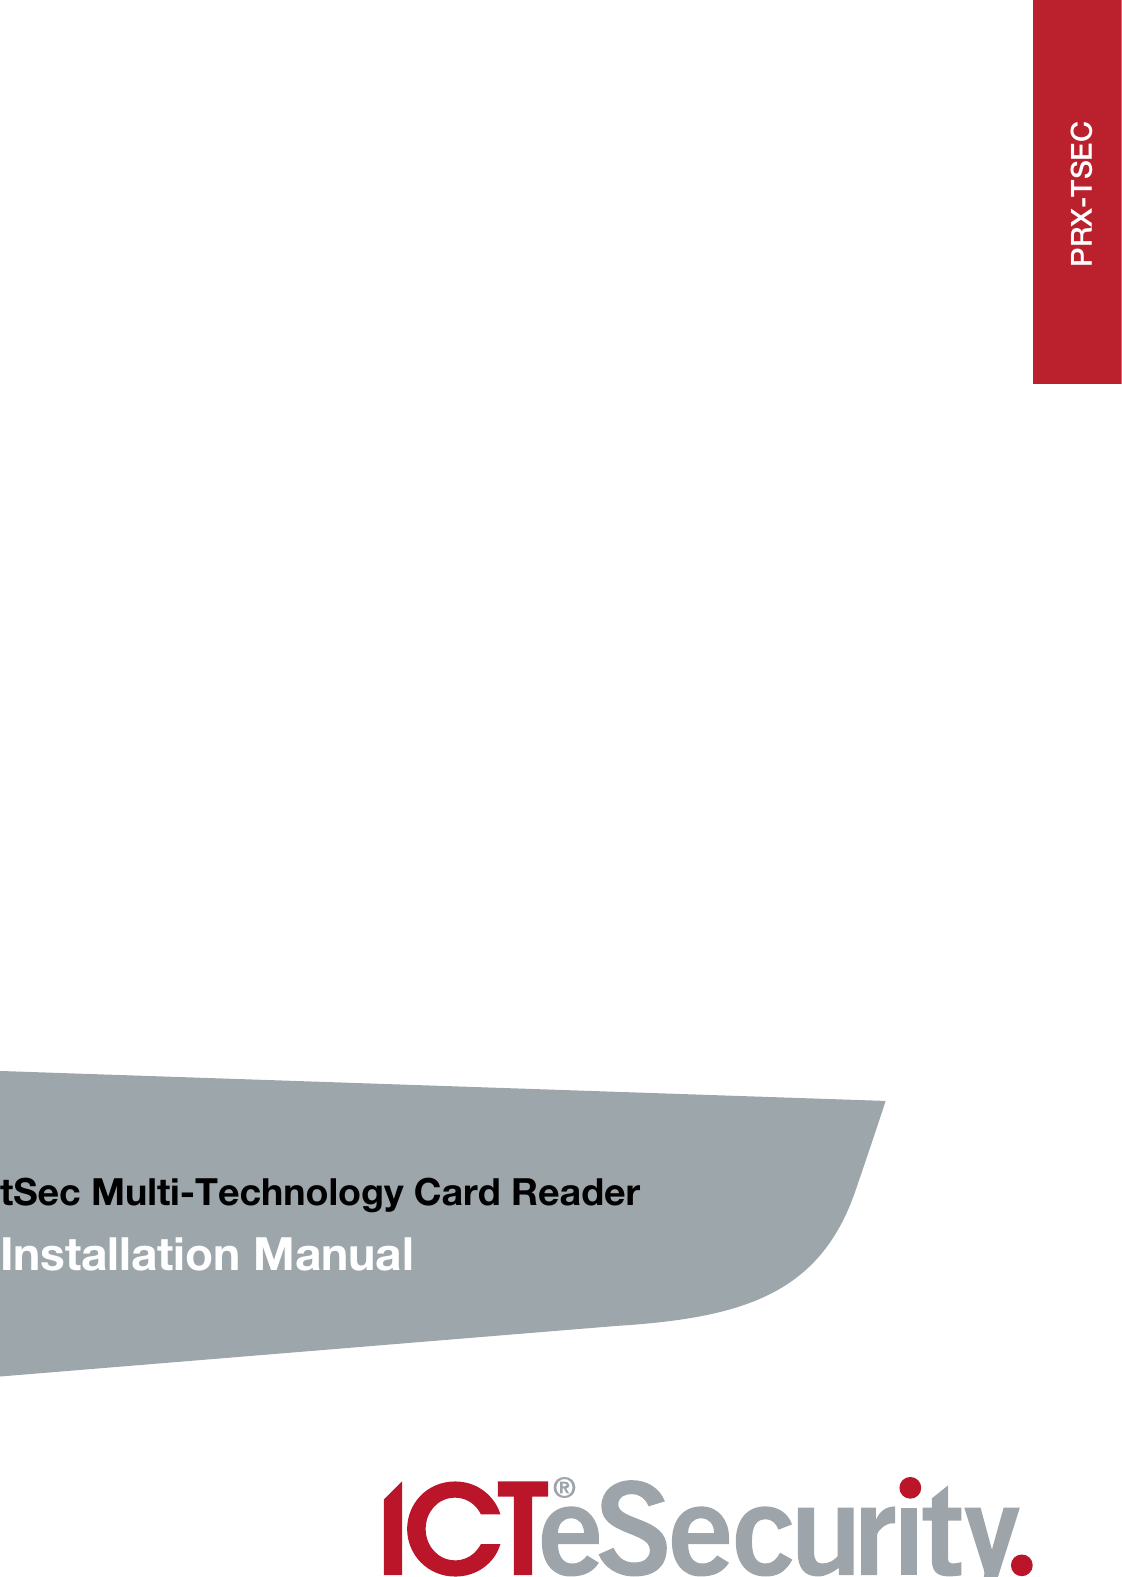   PRX-TSEC tSec Multi-Technology Card Reader   Installation Manual  